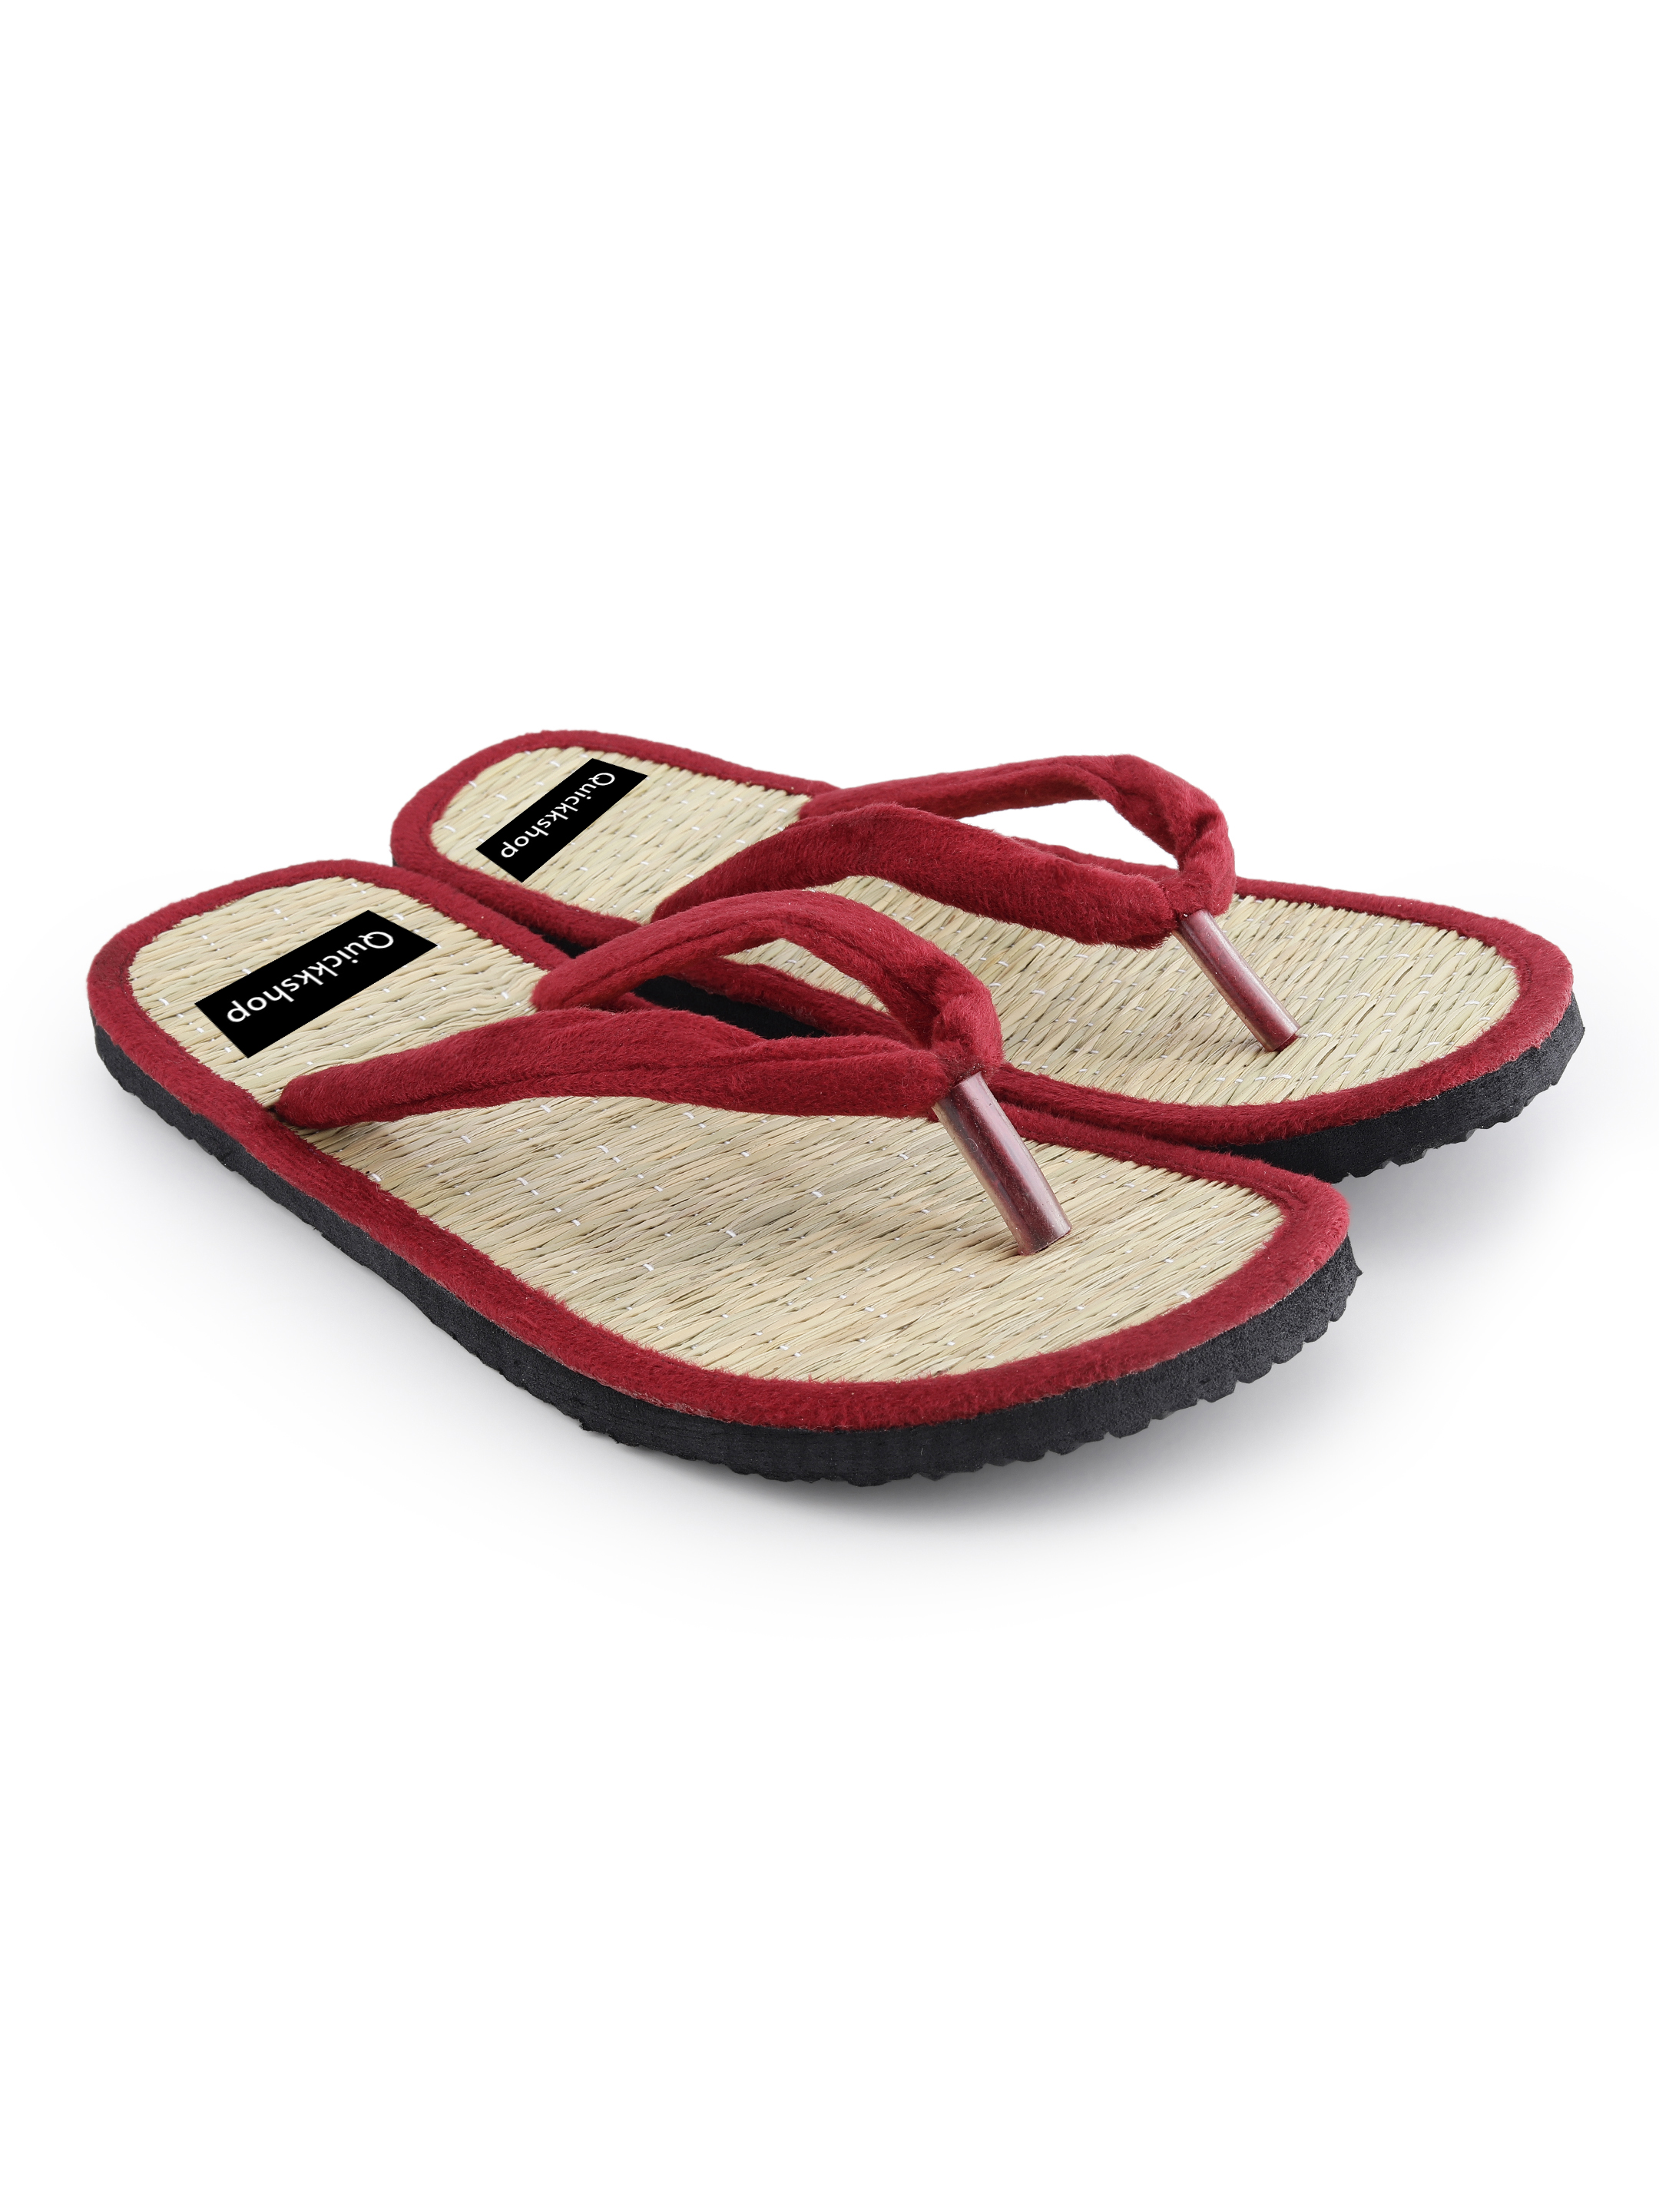 Quickkshop Natural Korai Grass Mat Eco-friendly Slippers For Women & Girl | Osho Slippers Stylish Comfortable Lightweight